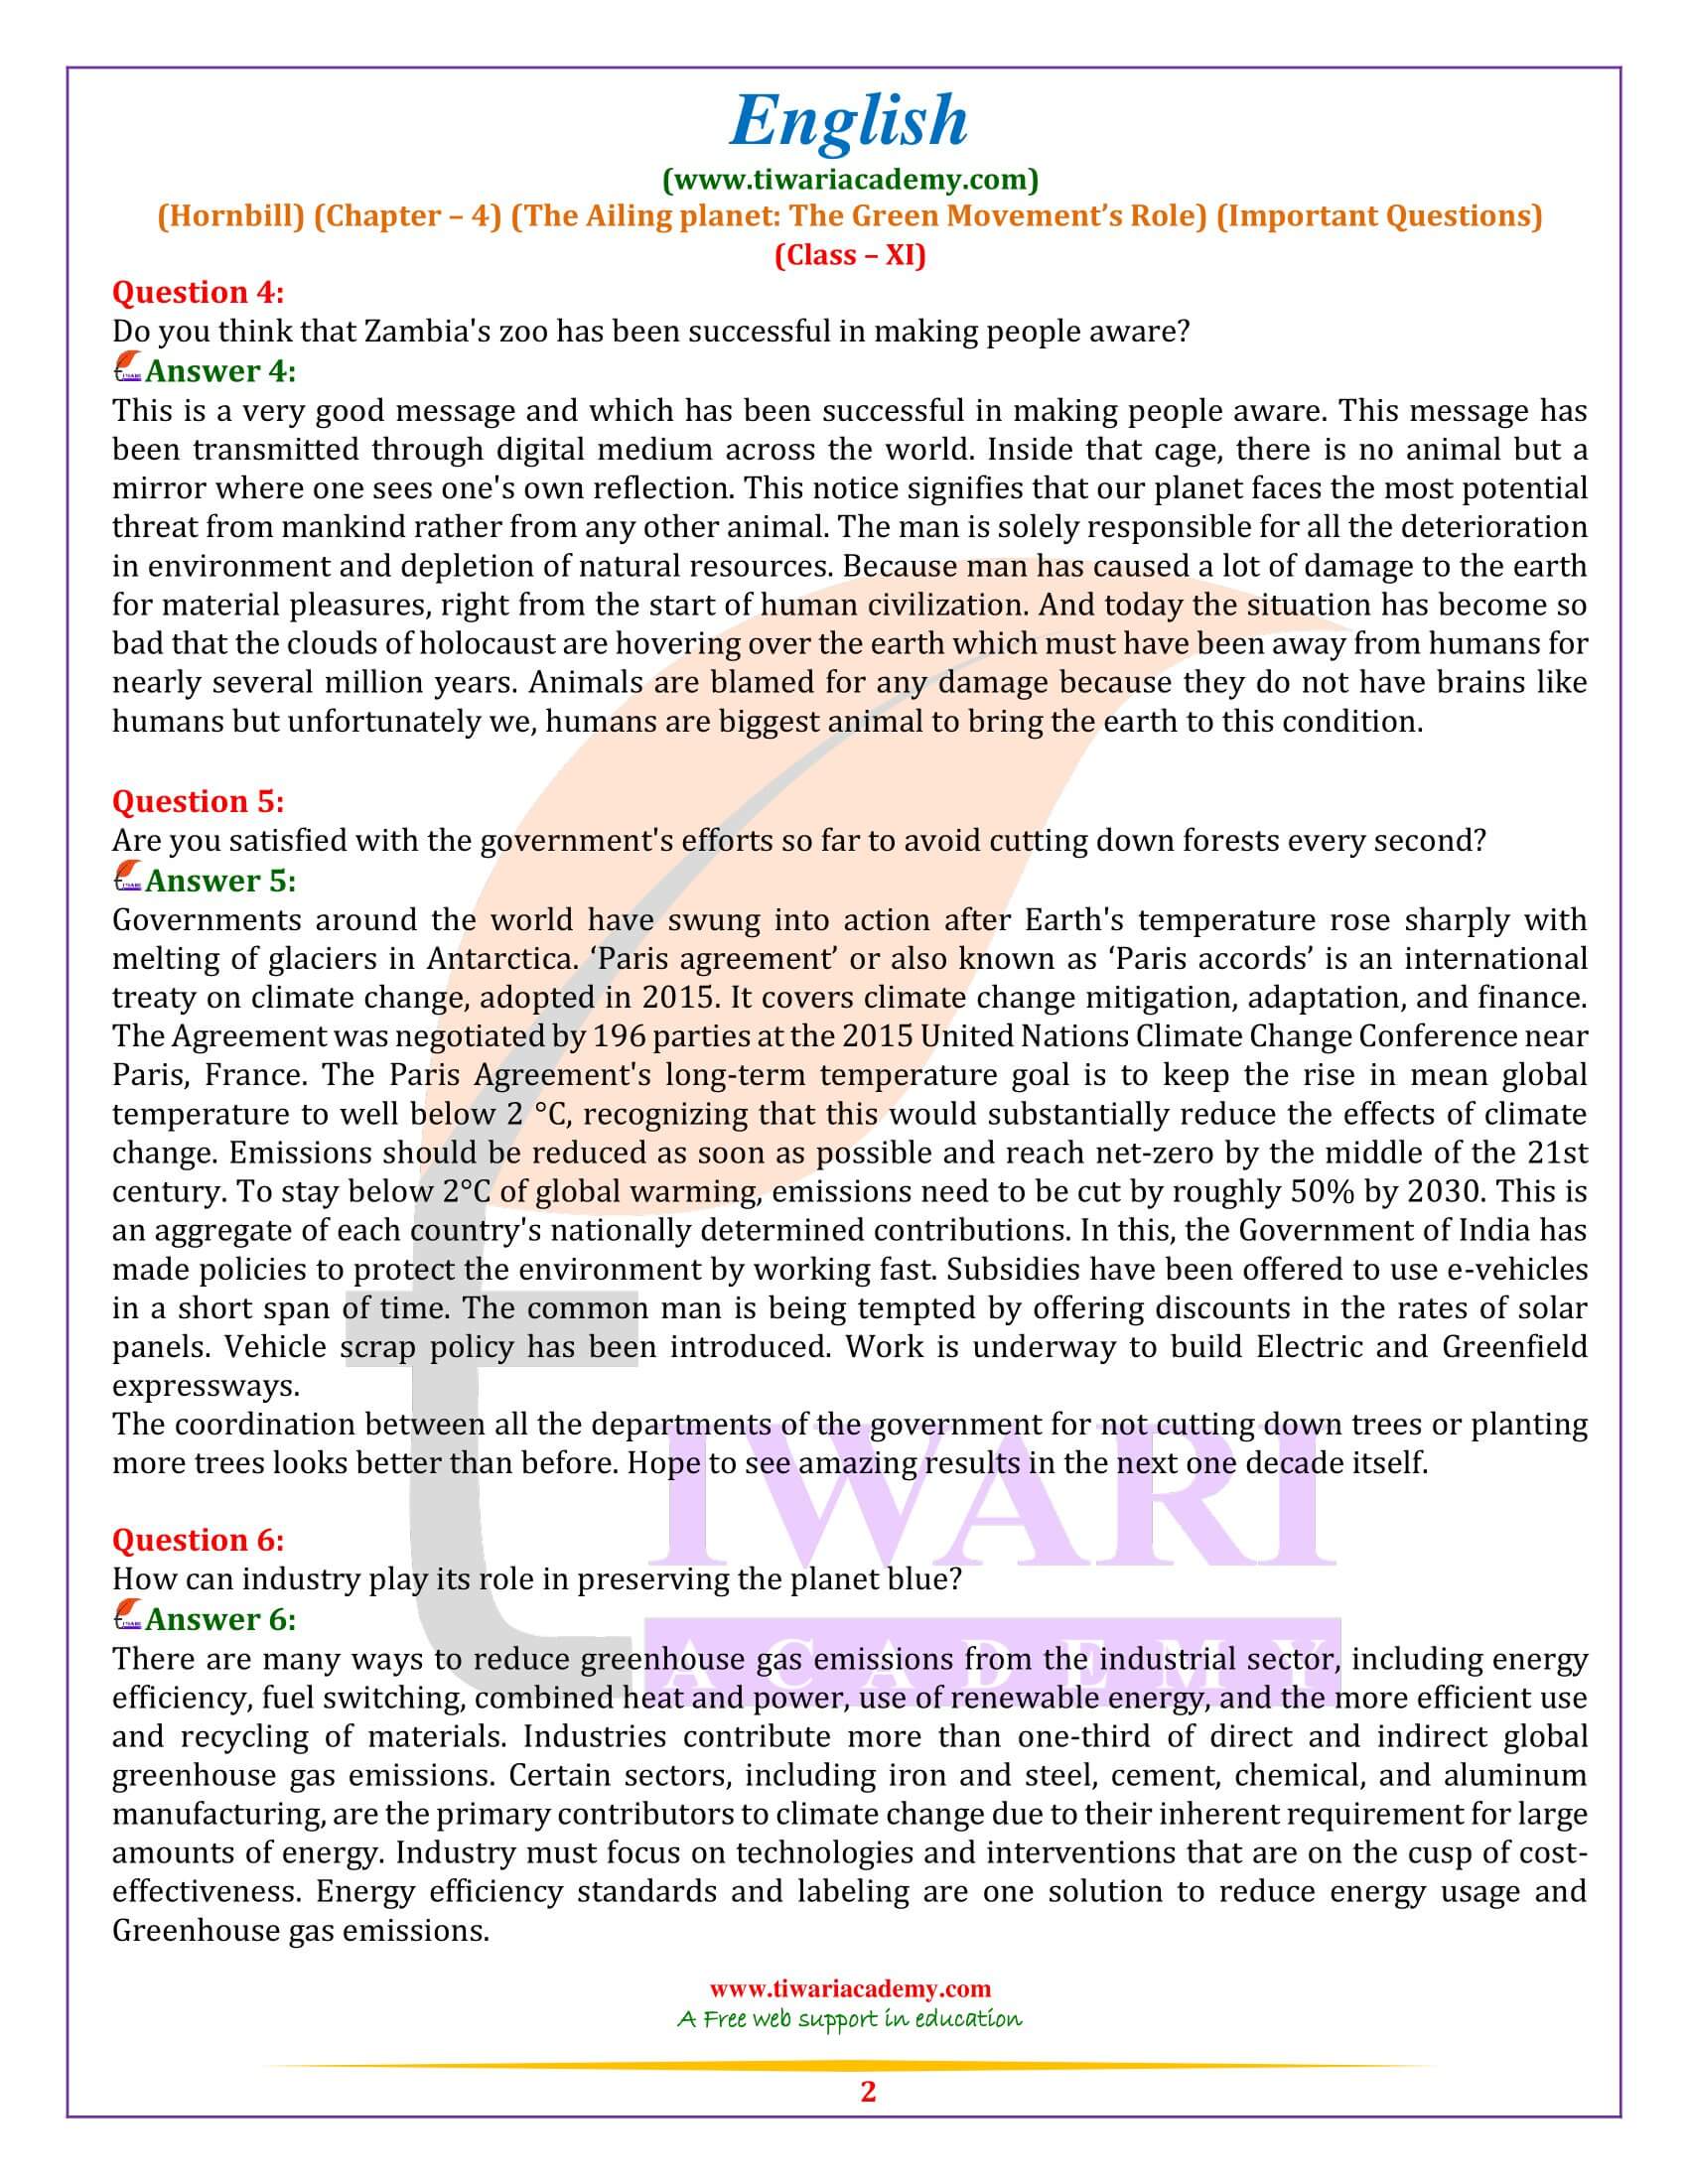 Class 11 English Hornbill Chapter 4 Extra Questions